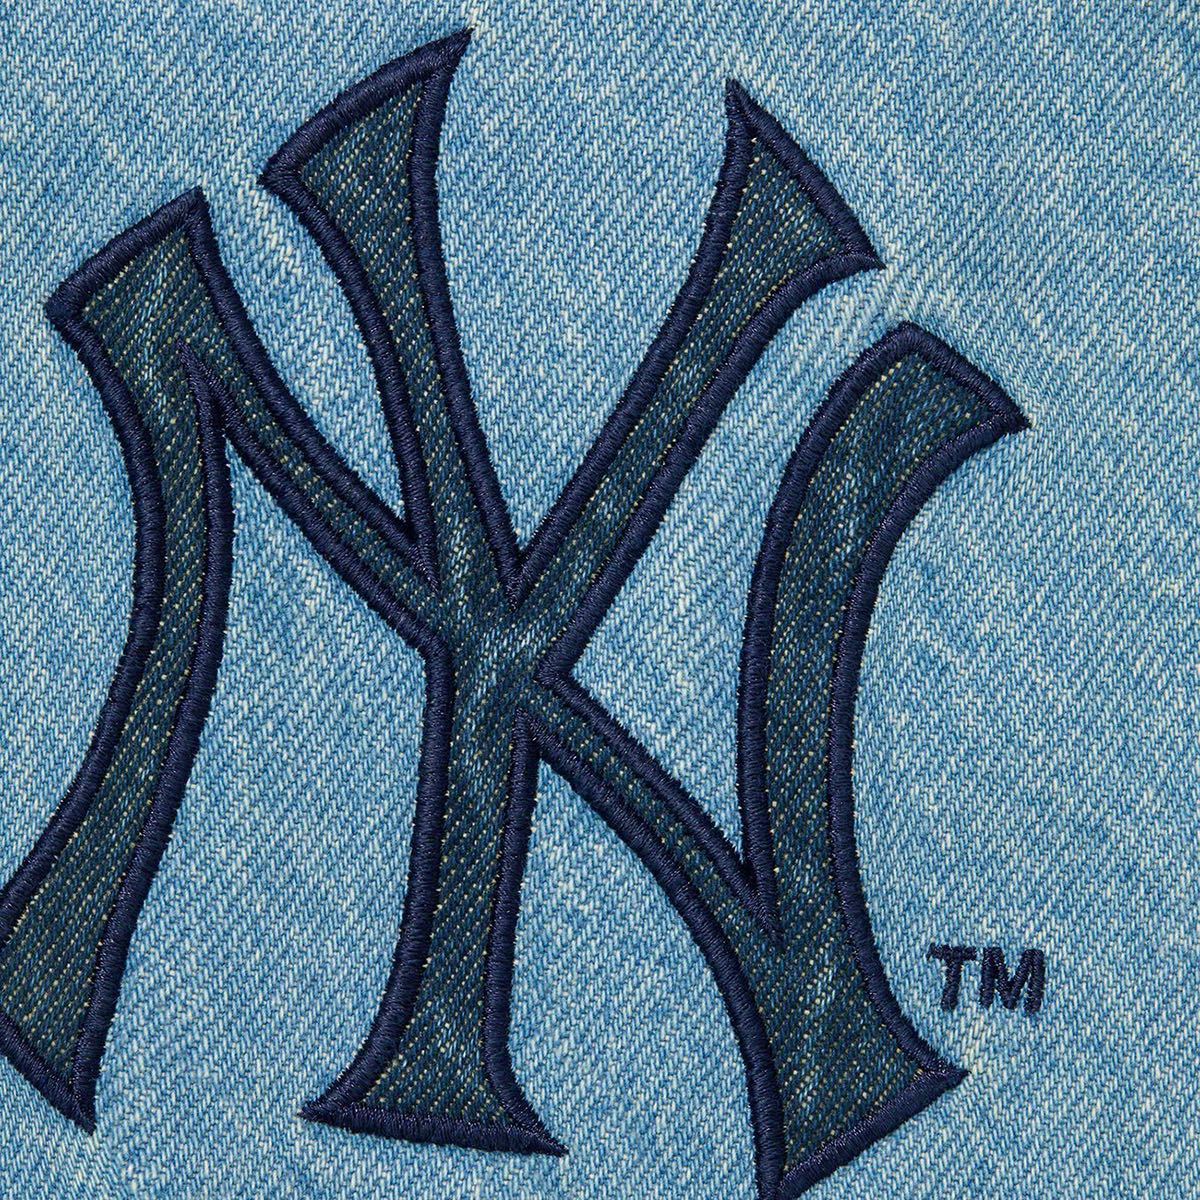 Supreme®/New York Yankees™Denim Trucker Jacket Washed Black